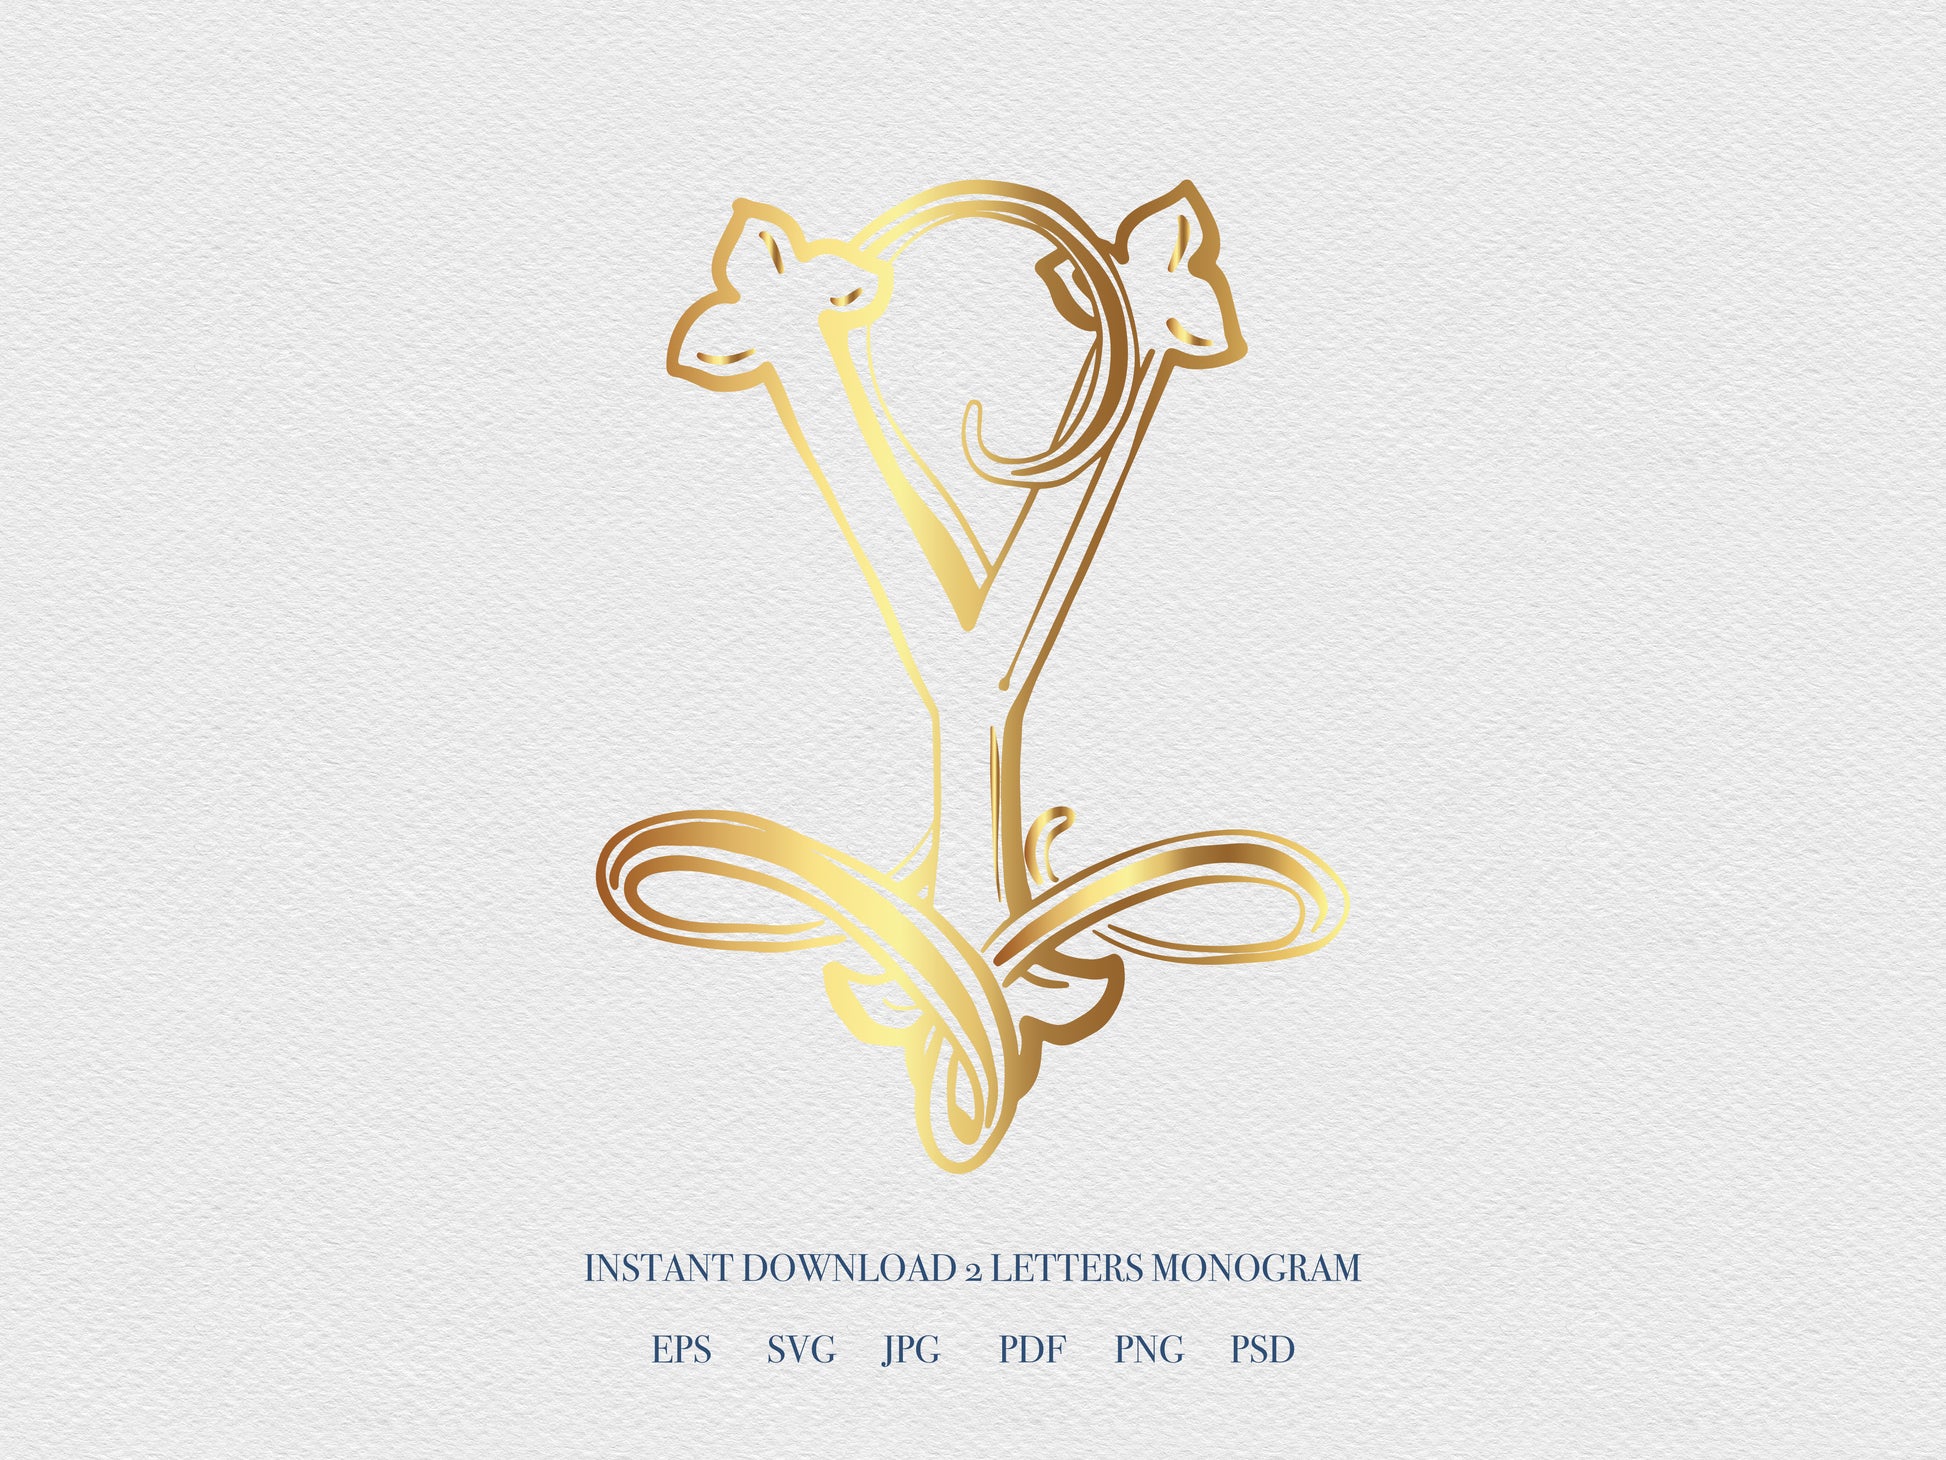 2 Letter Monogram with Letters LY YL | Digital Download - Wedding Monogram SVG, Personal Logo, Wedding Logo for Wedding Invitations The Wedding Crest Lab